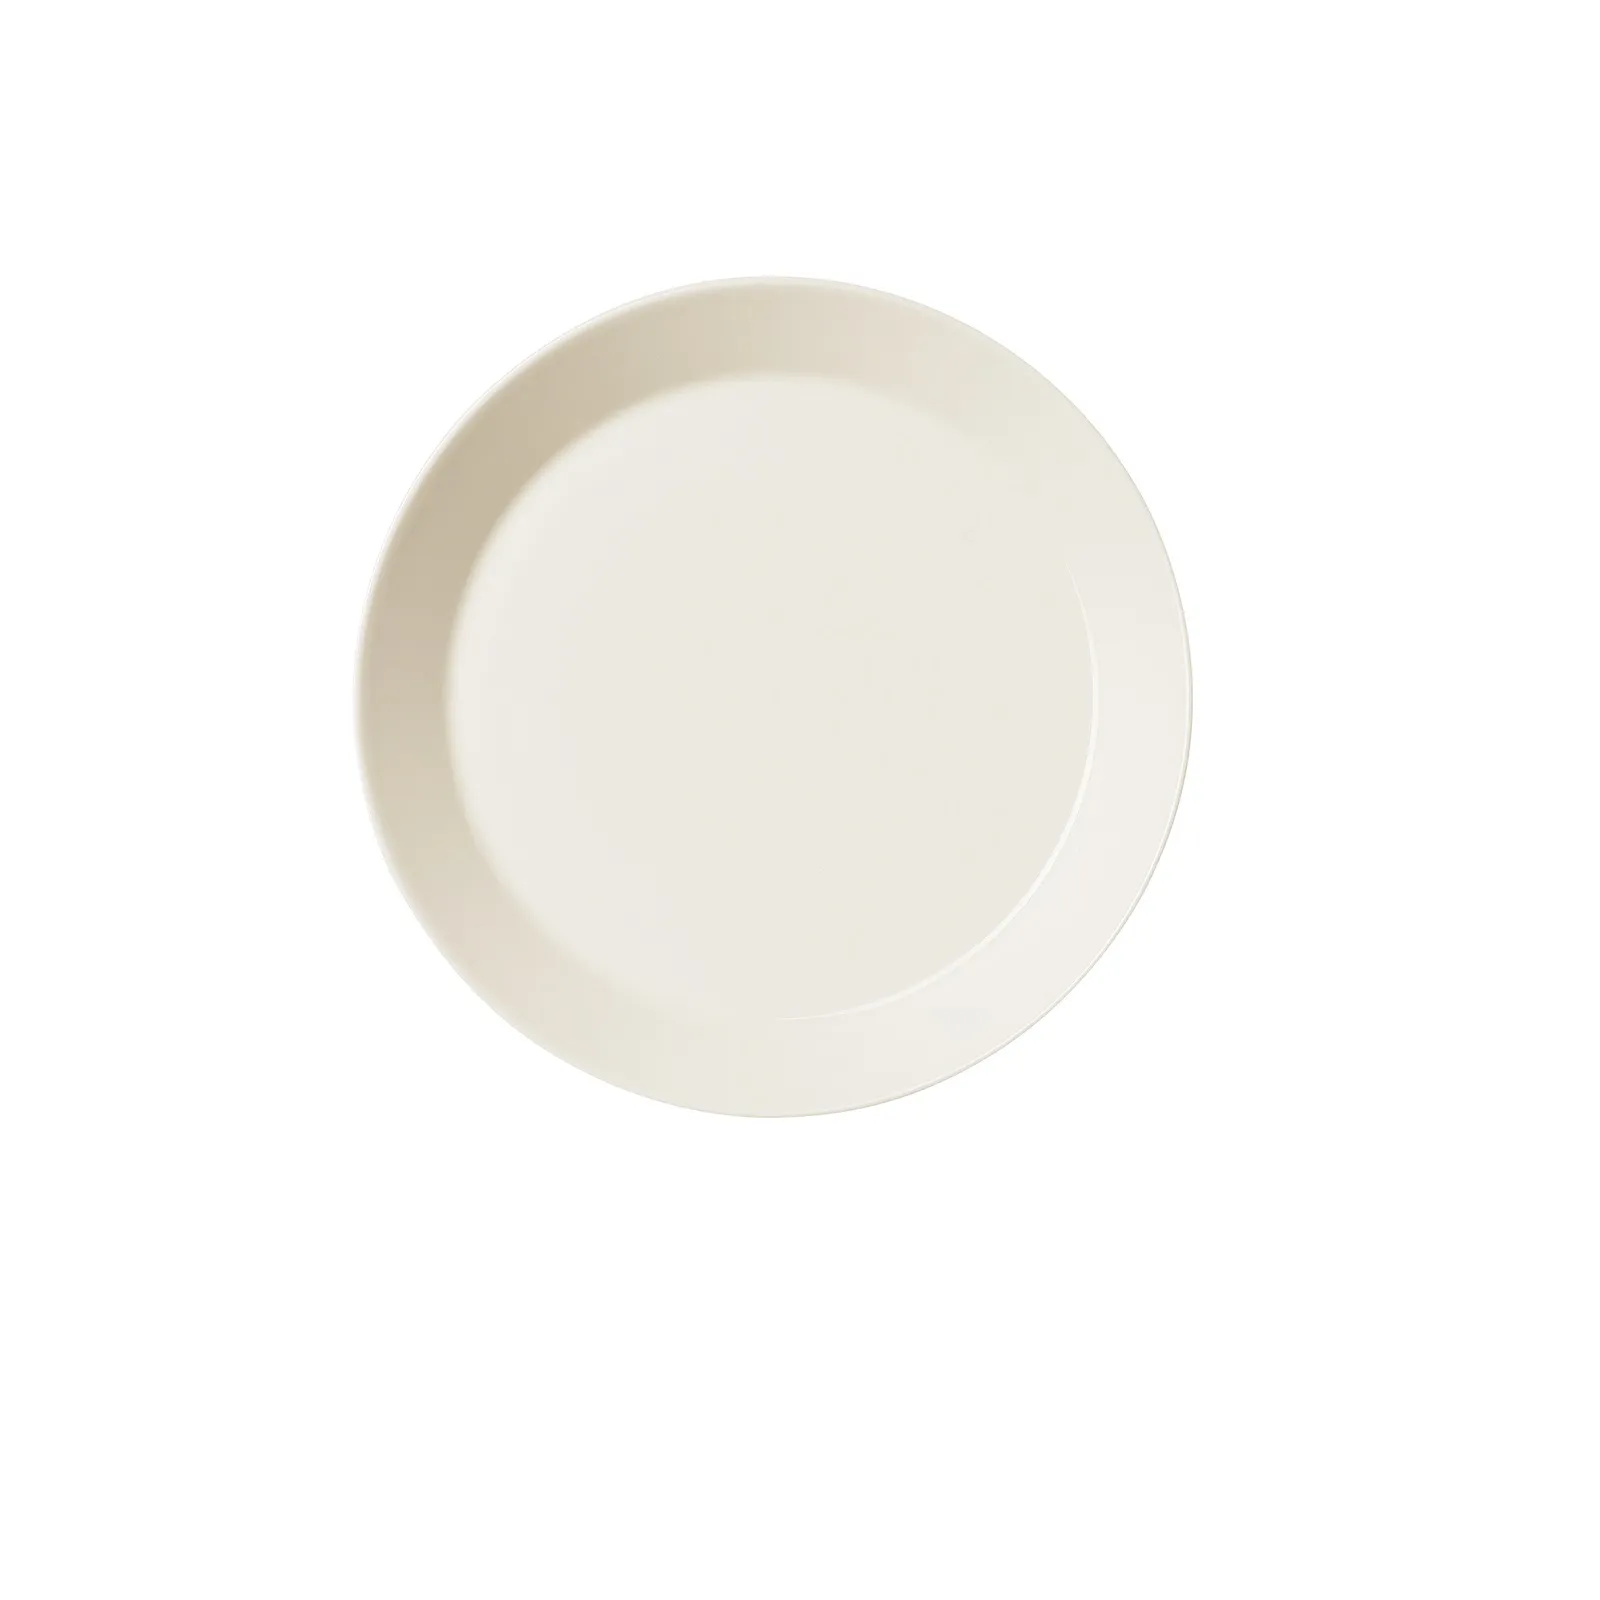 Iittala Teema plate 26 cm white